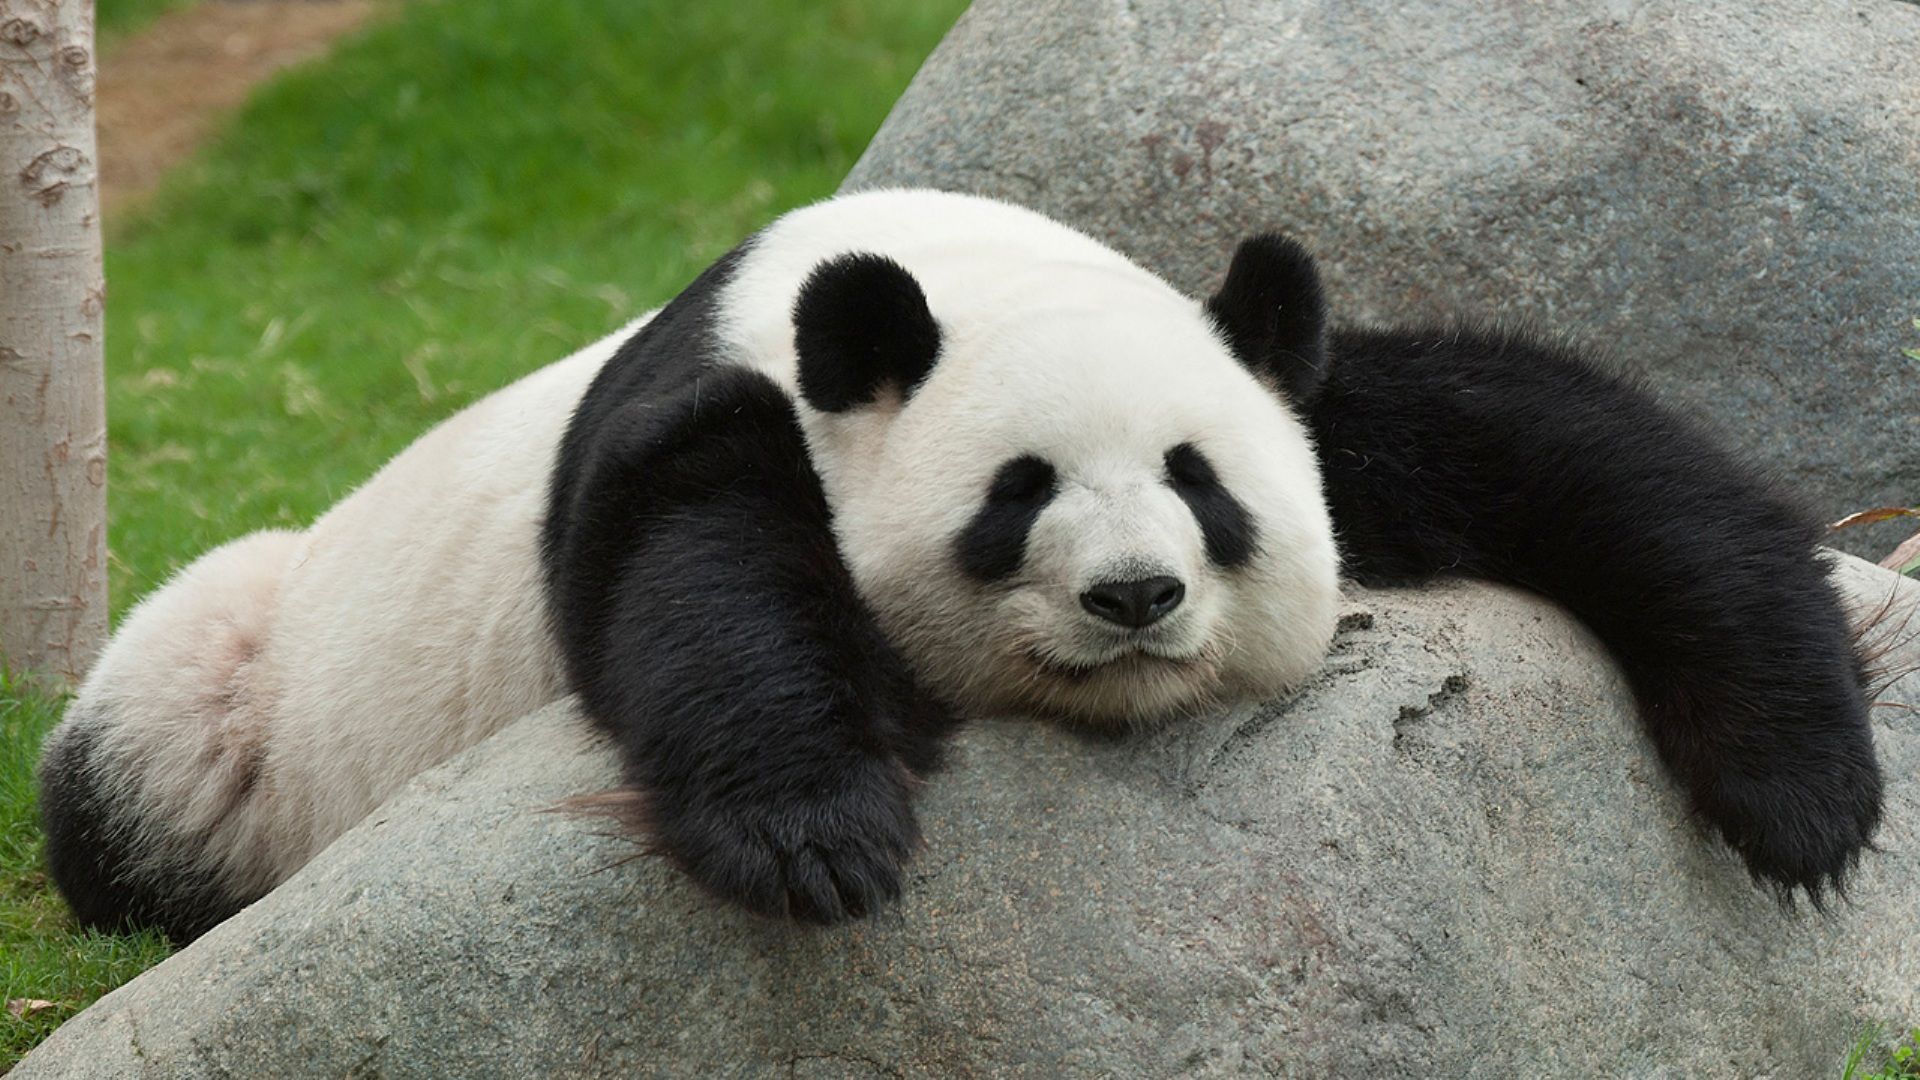 Cute Sleeping Panda Wallpapers